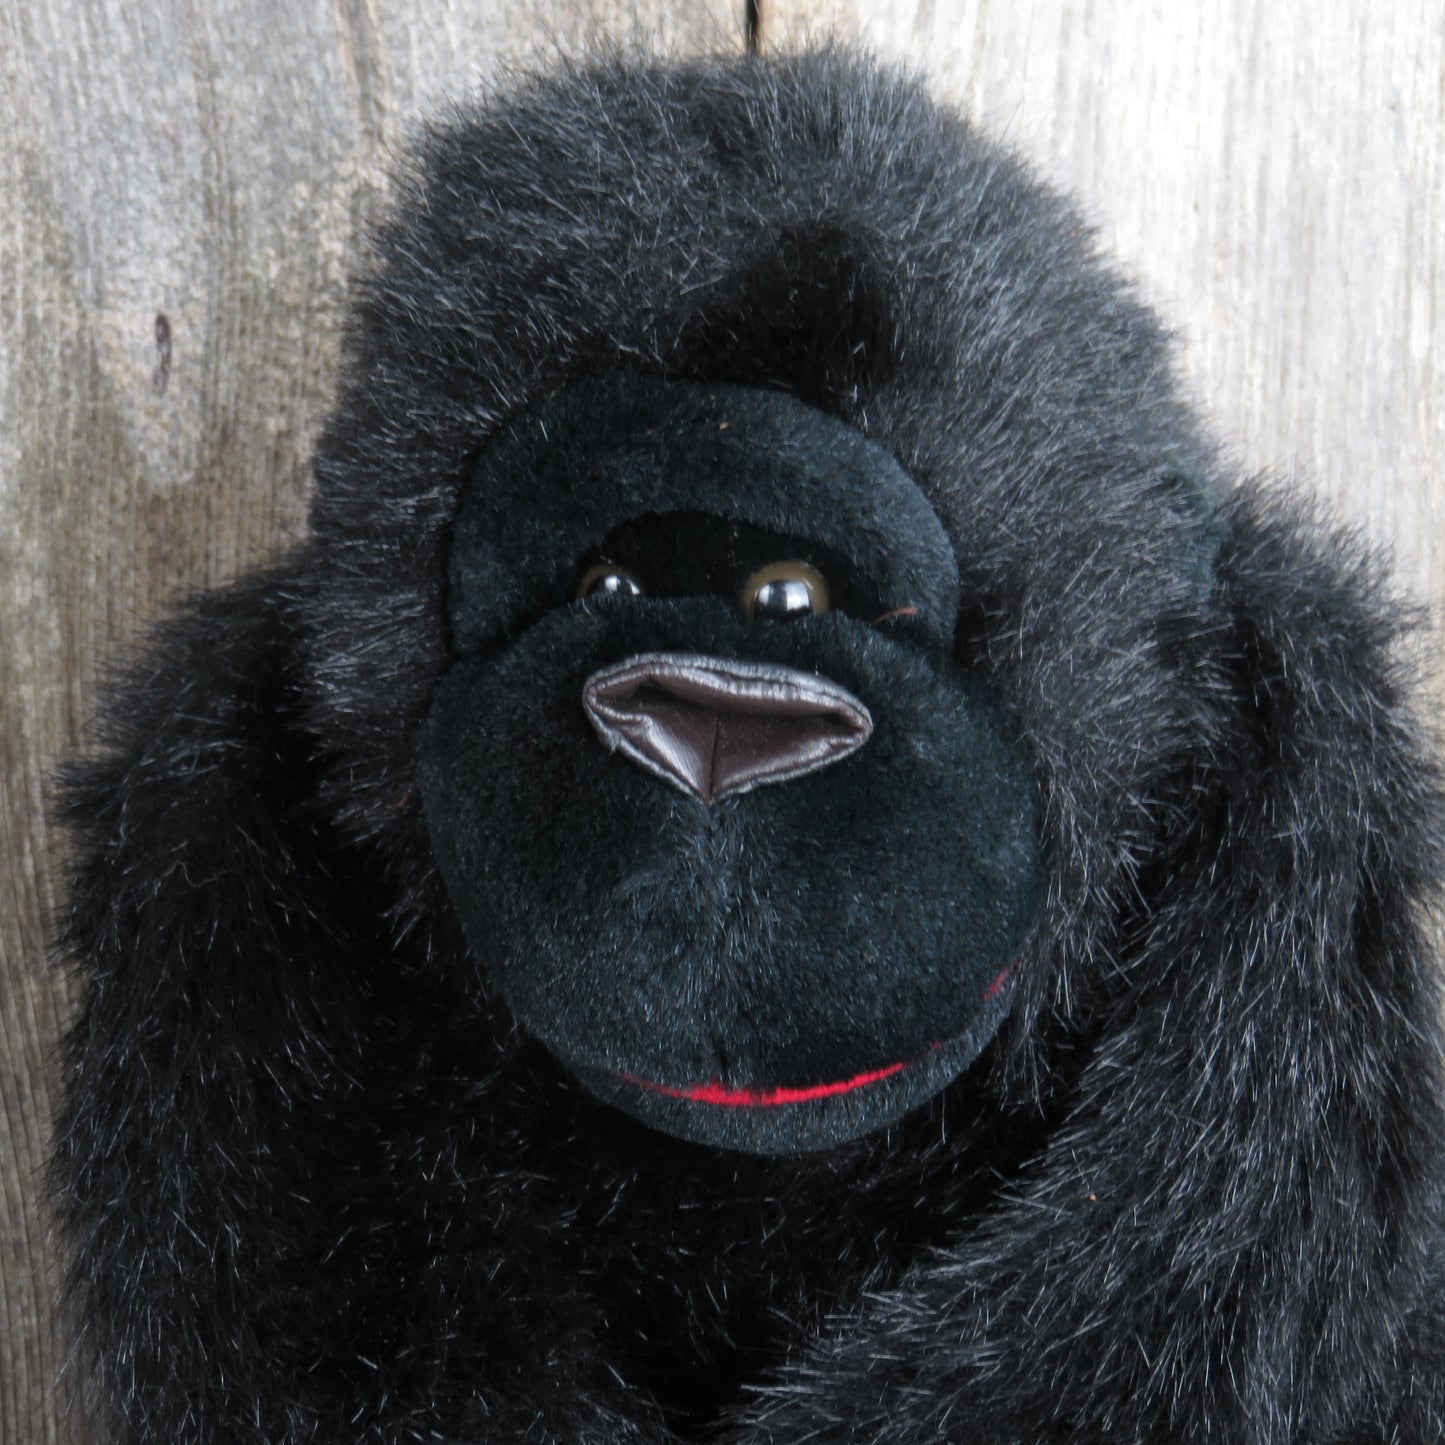 Vintage Gorilla Plush Monkey Ape Park Avenue Korea Red Mouth Stuffed Animal Primate Toy Doll - At Grandma's Table